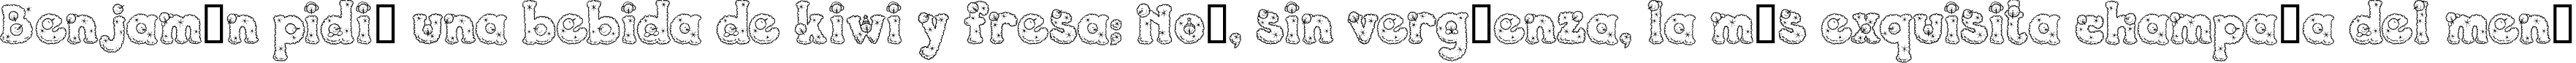 Пример написания шрифтом PC Snowballs текста на испанском